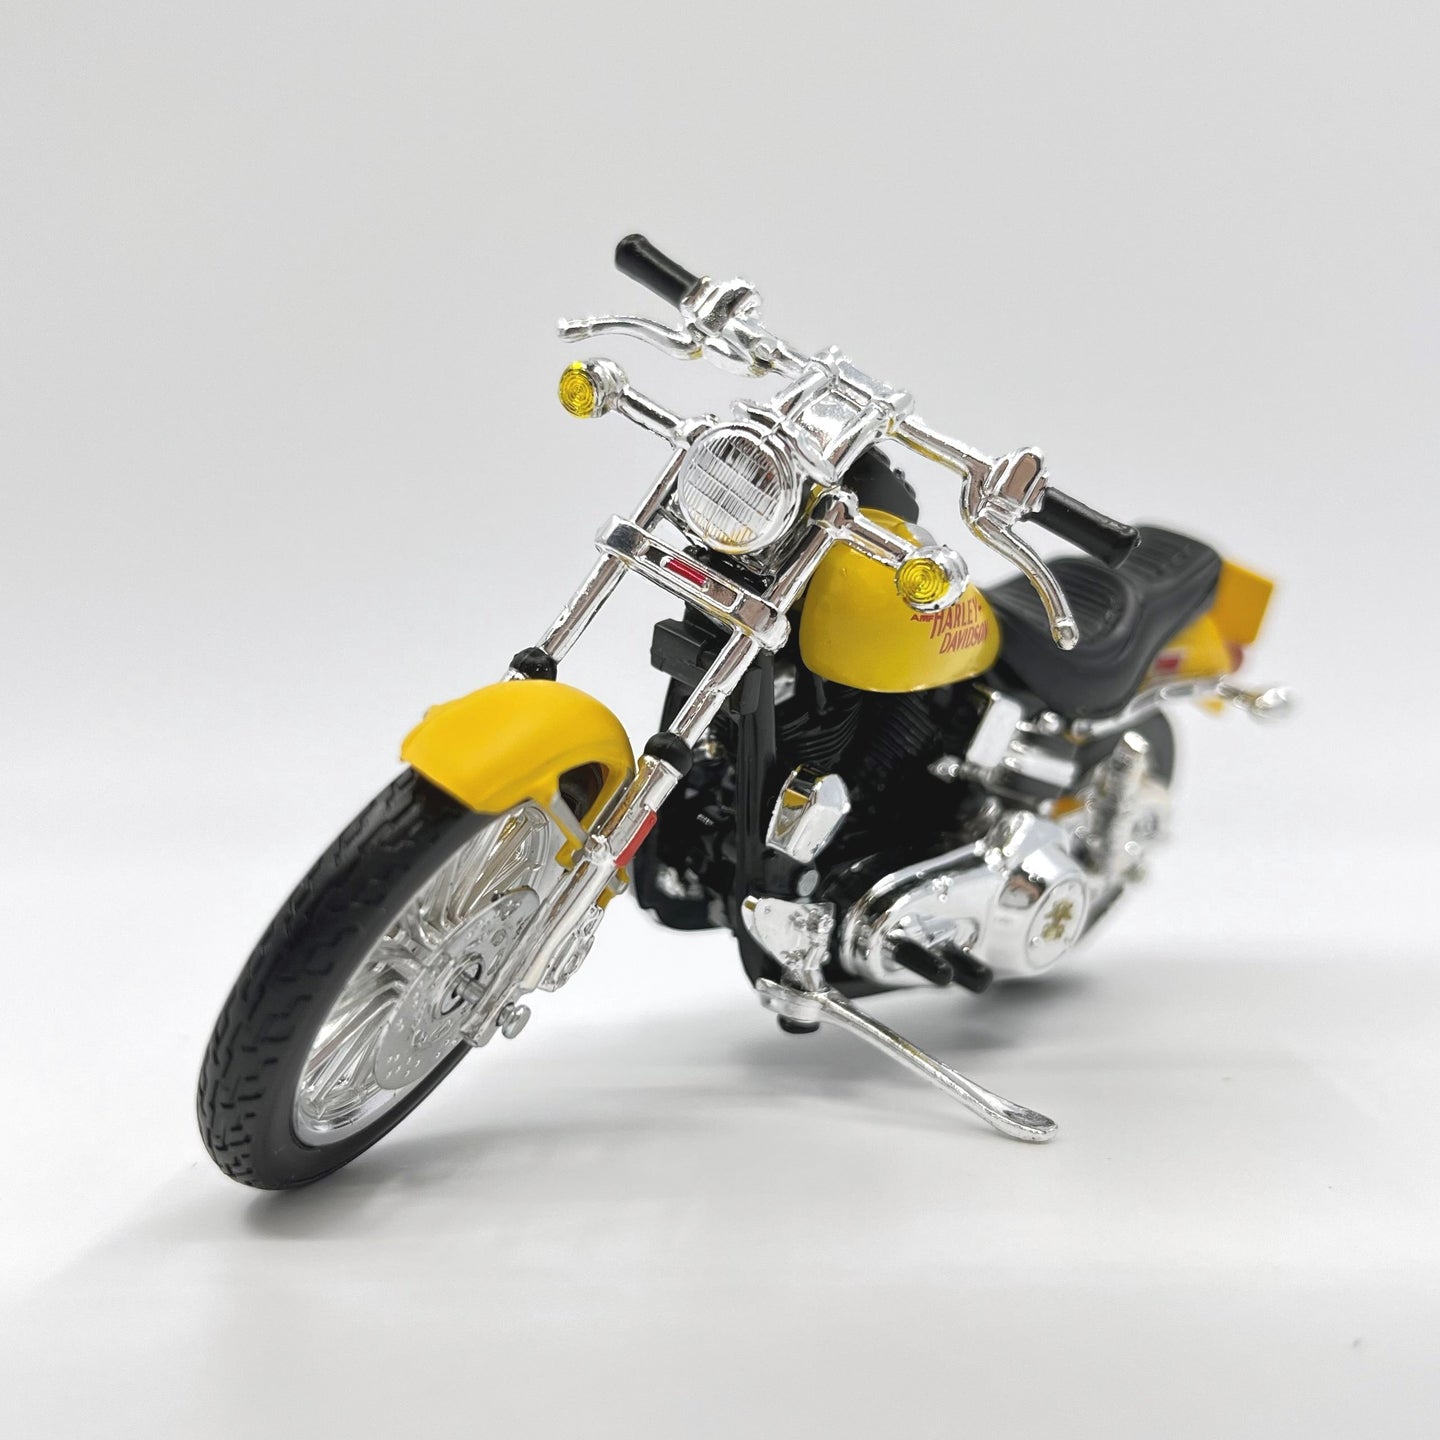 1977 Harley Davidson FXS Low Rider 1:18 Diecast Bike Motorcycle Model By Maisto